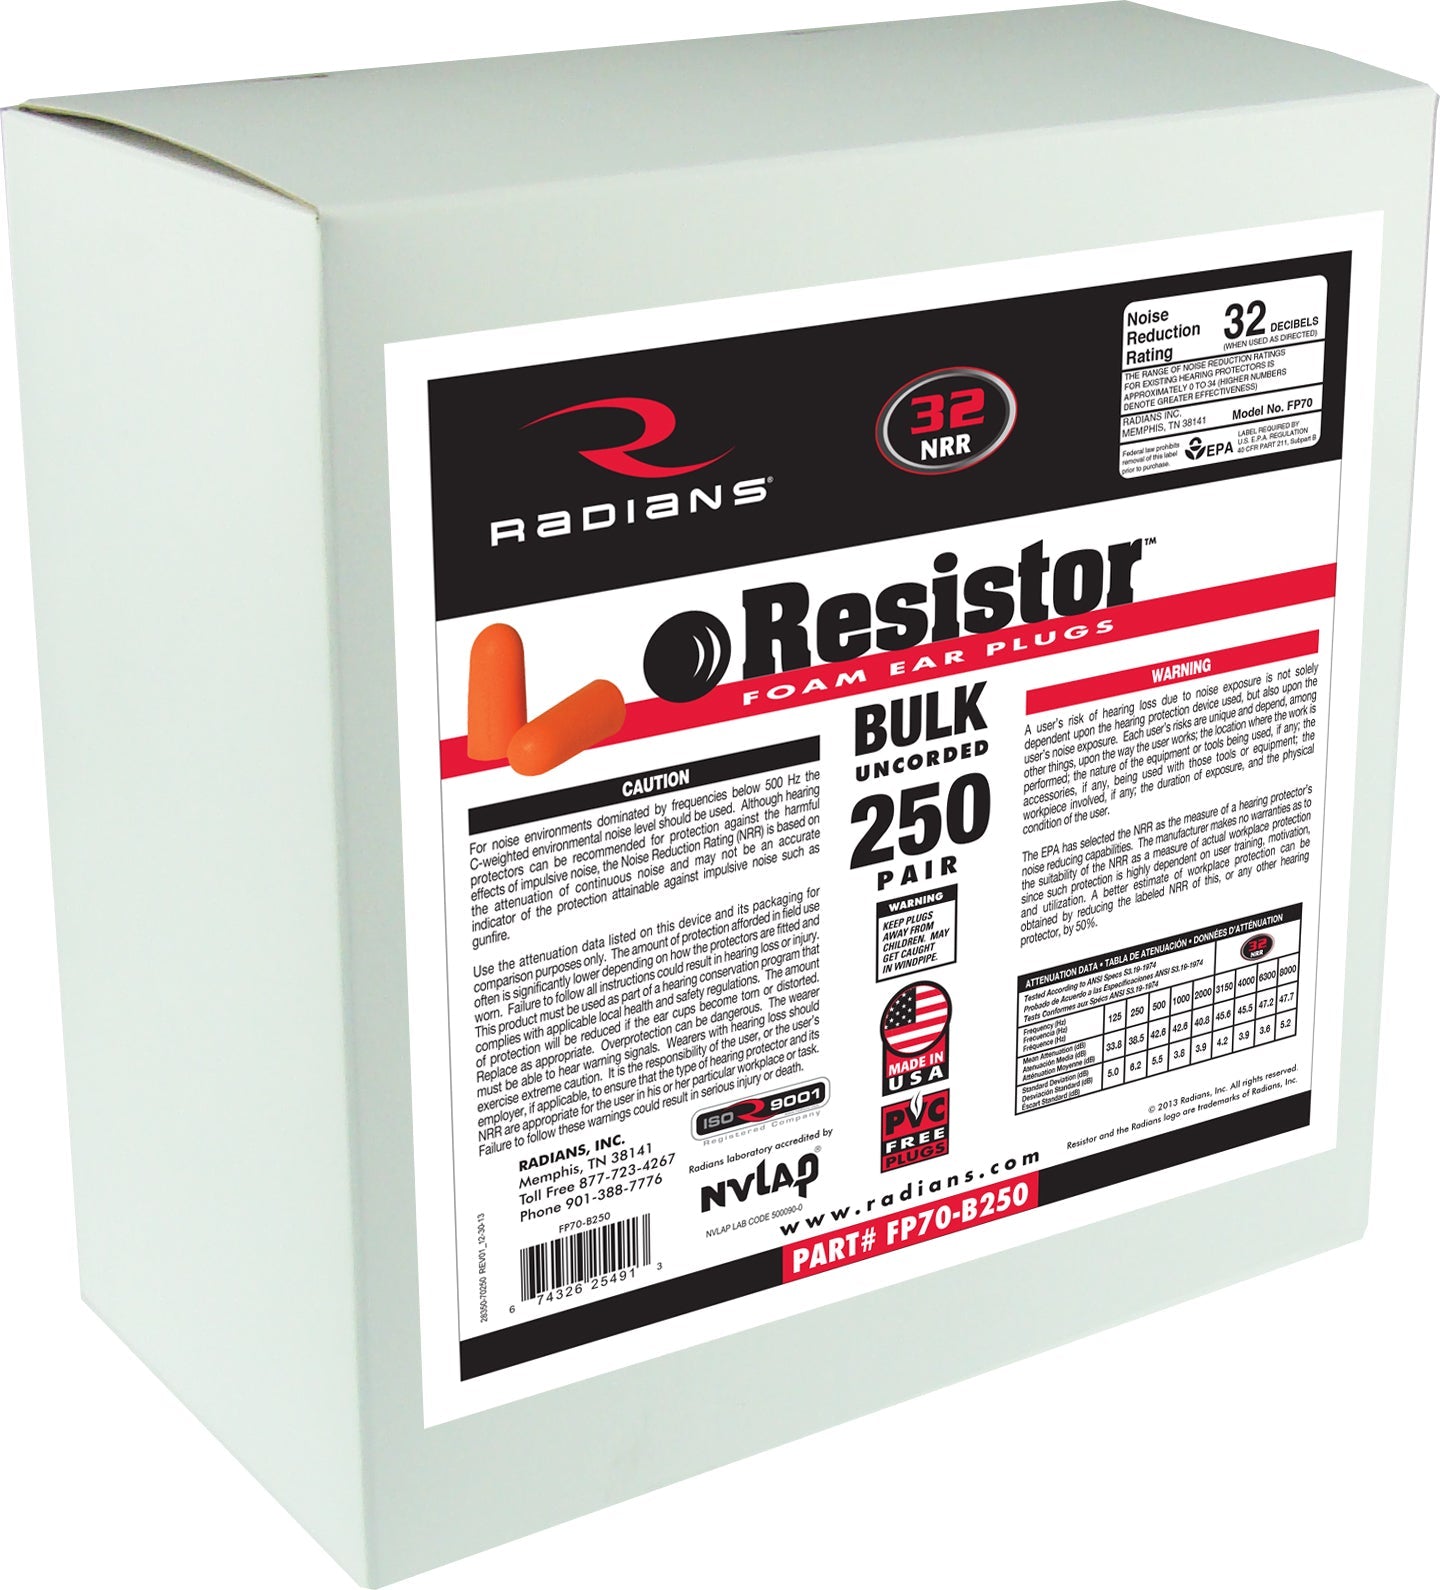 Radians Resistor® 32 Foam Uncorded Earplug Dispenser Refill